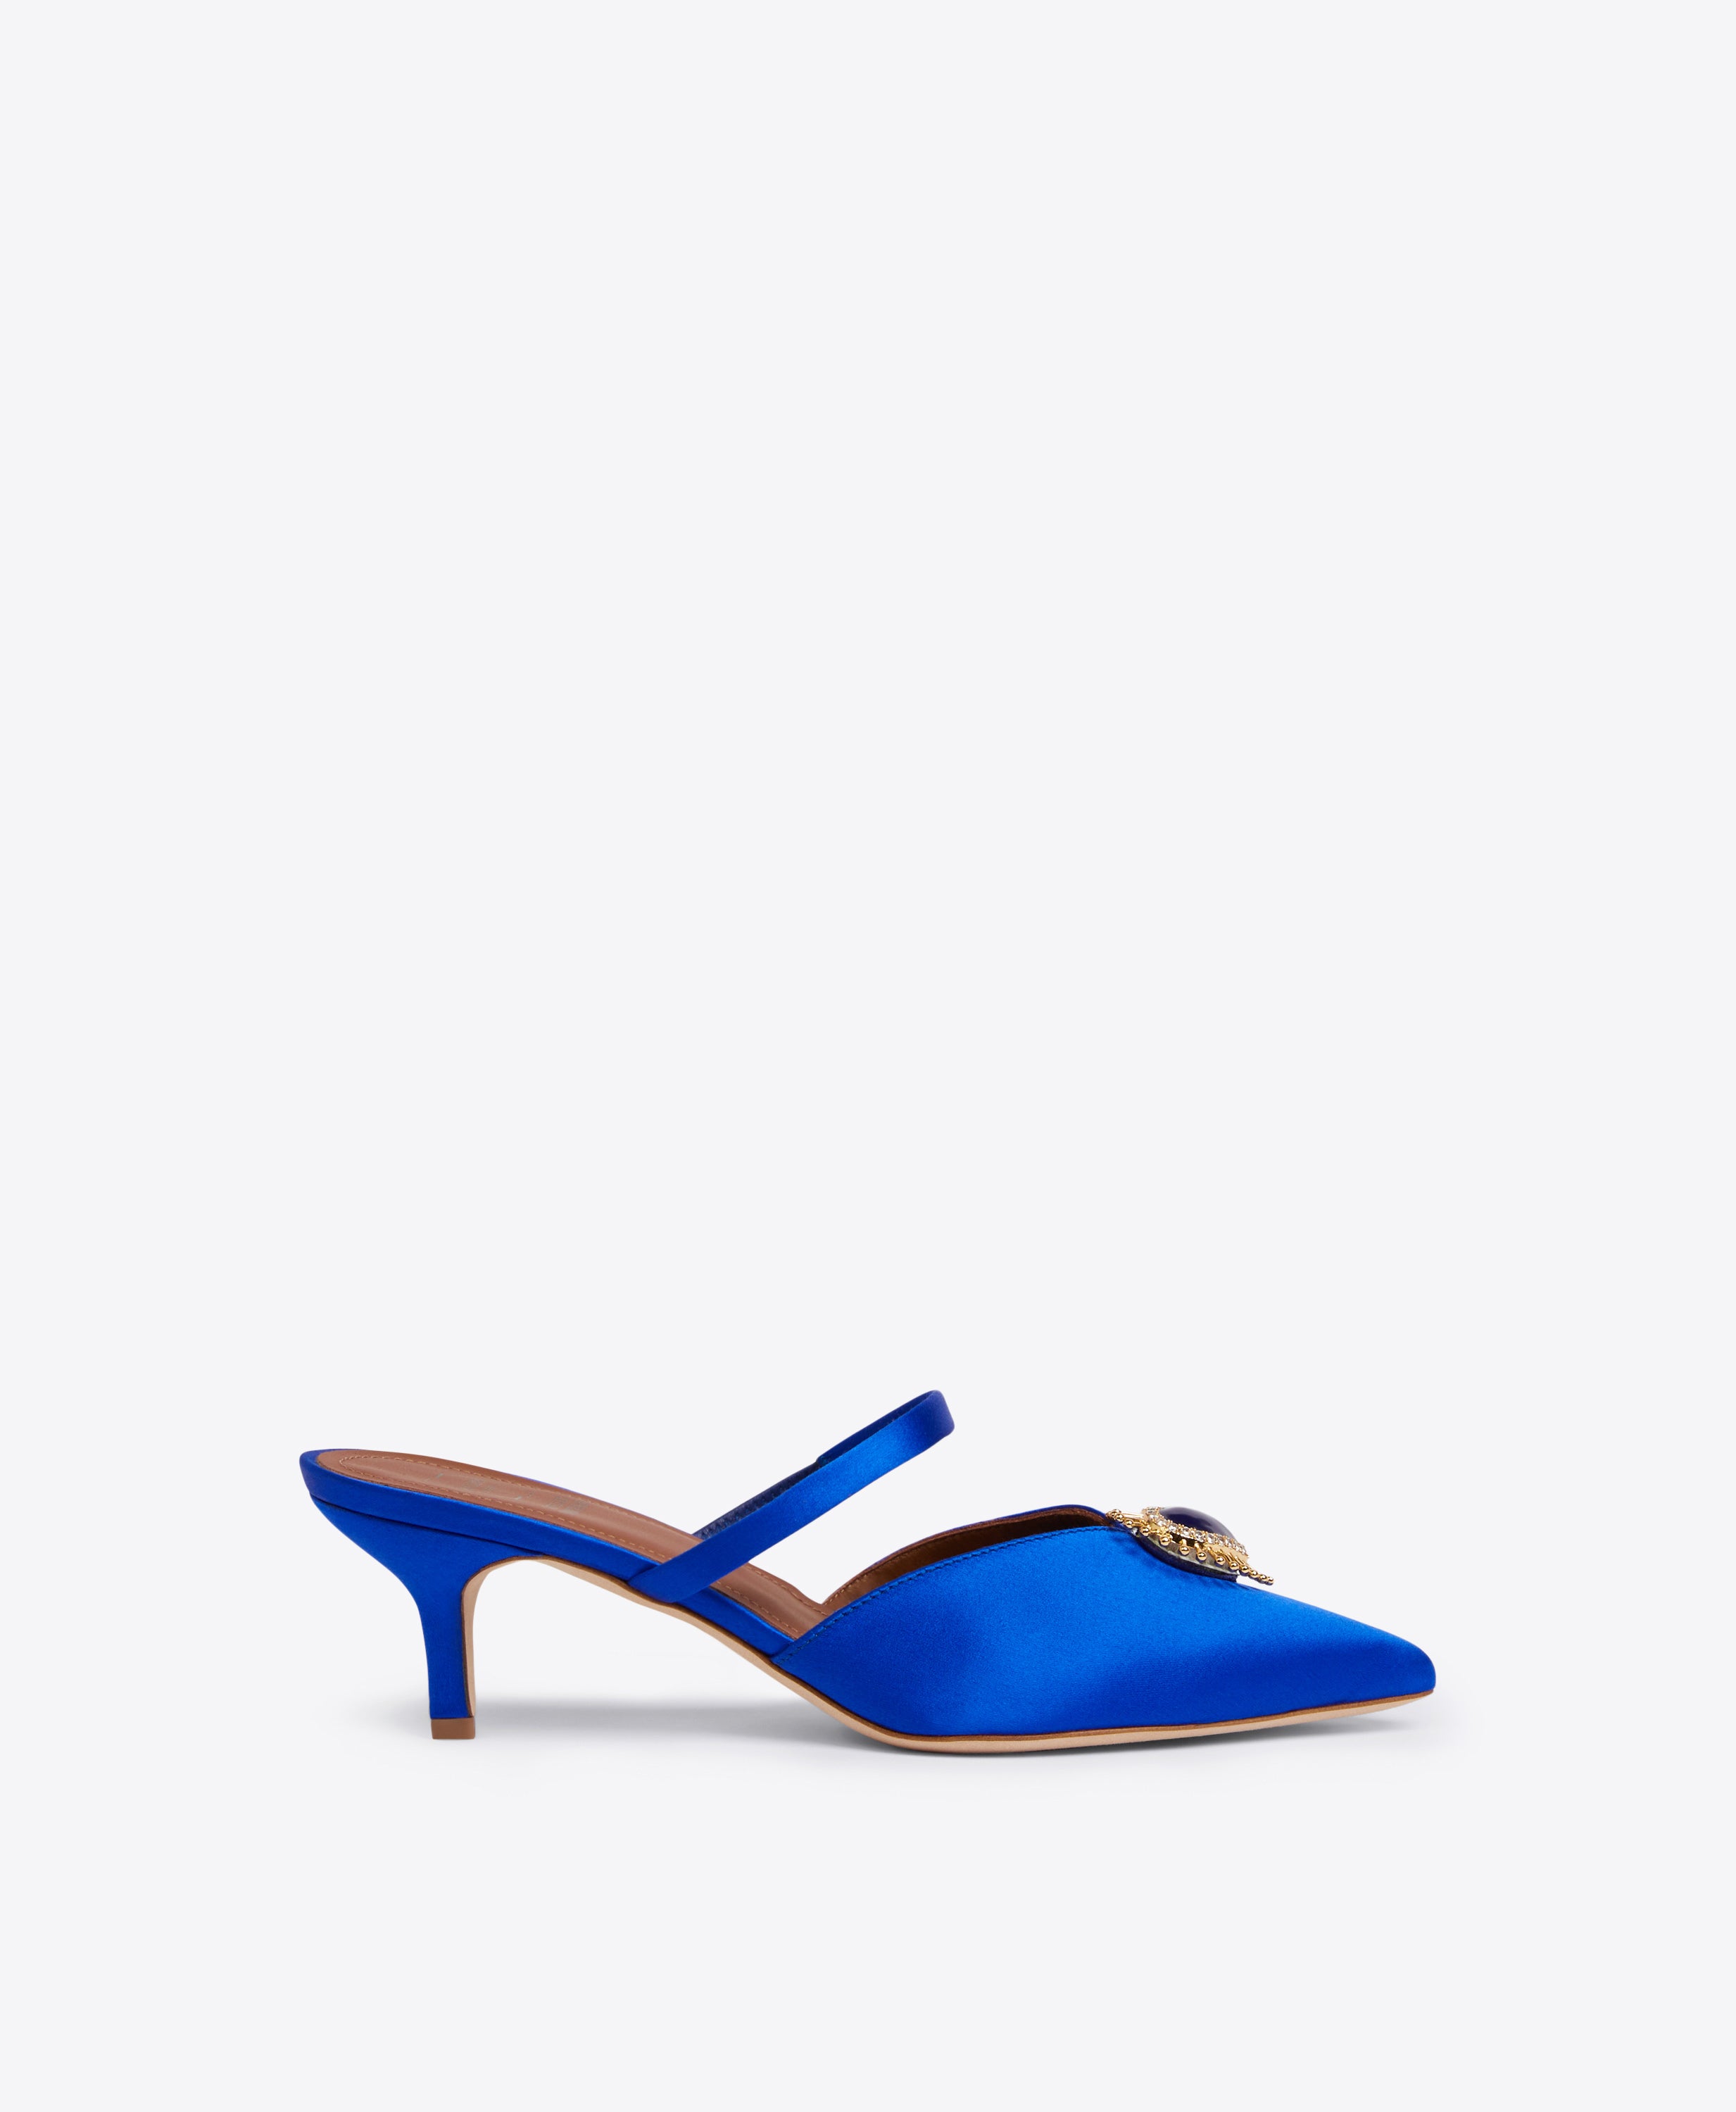 Saige Just Fab Electric Blue Heels | Shoes women heels, Heels, Blue heels